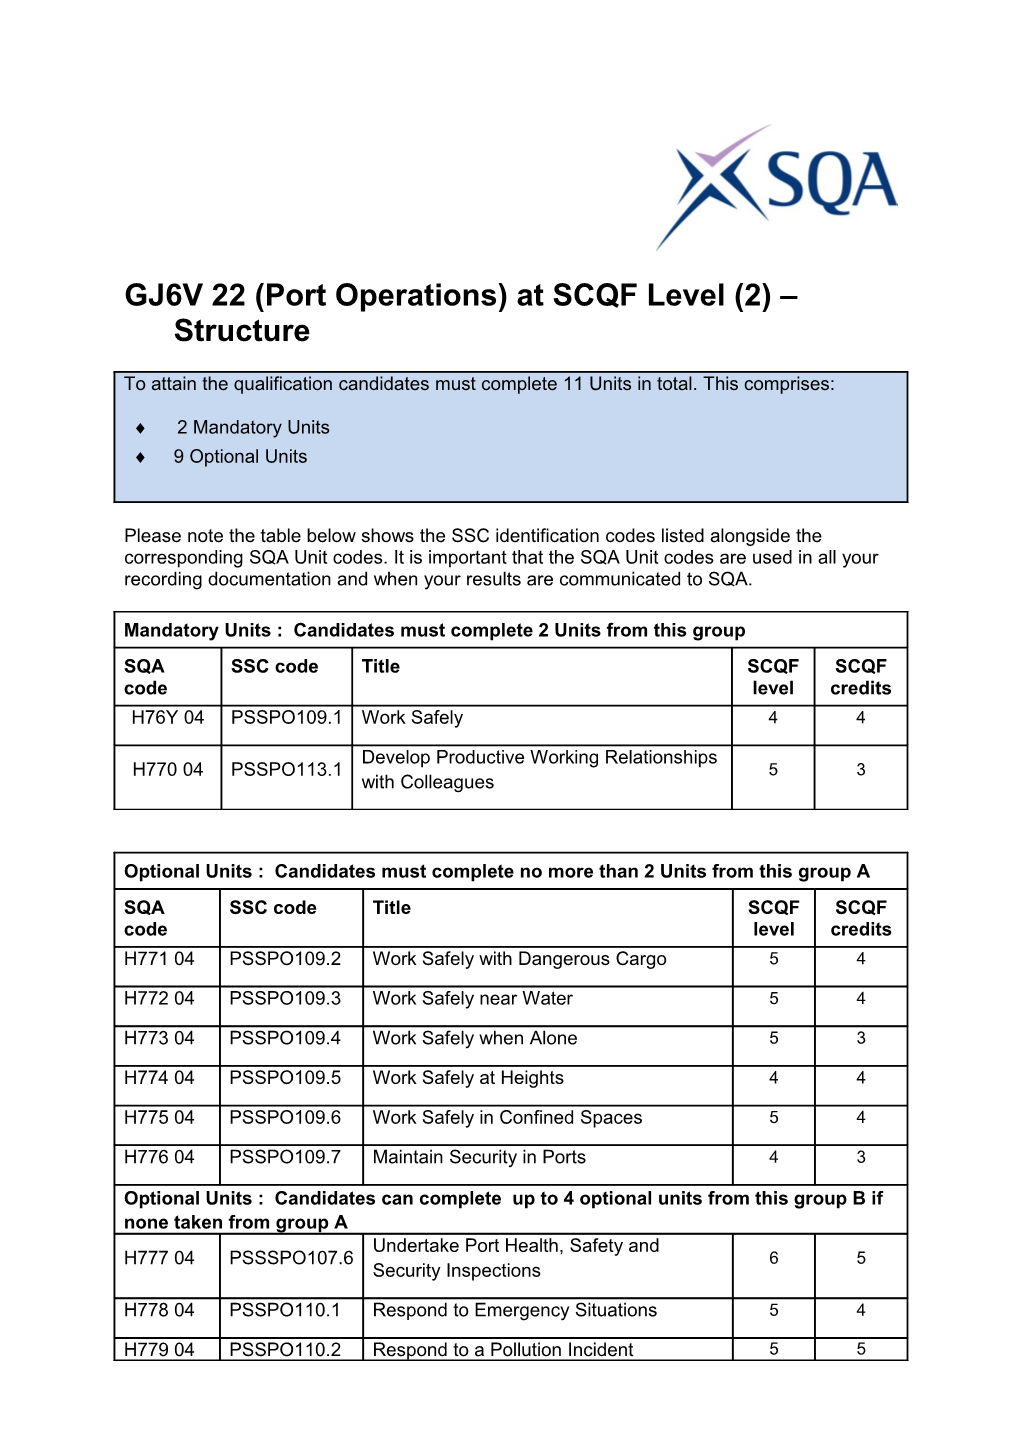 GJ6V 22 (Port Operations) at SCQF Level (2) Structure